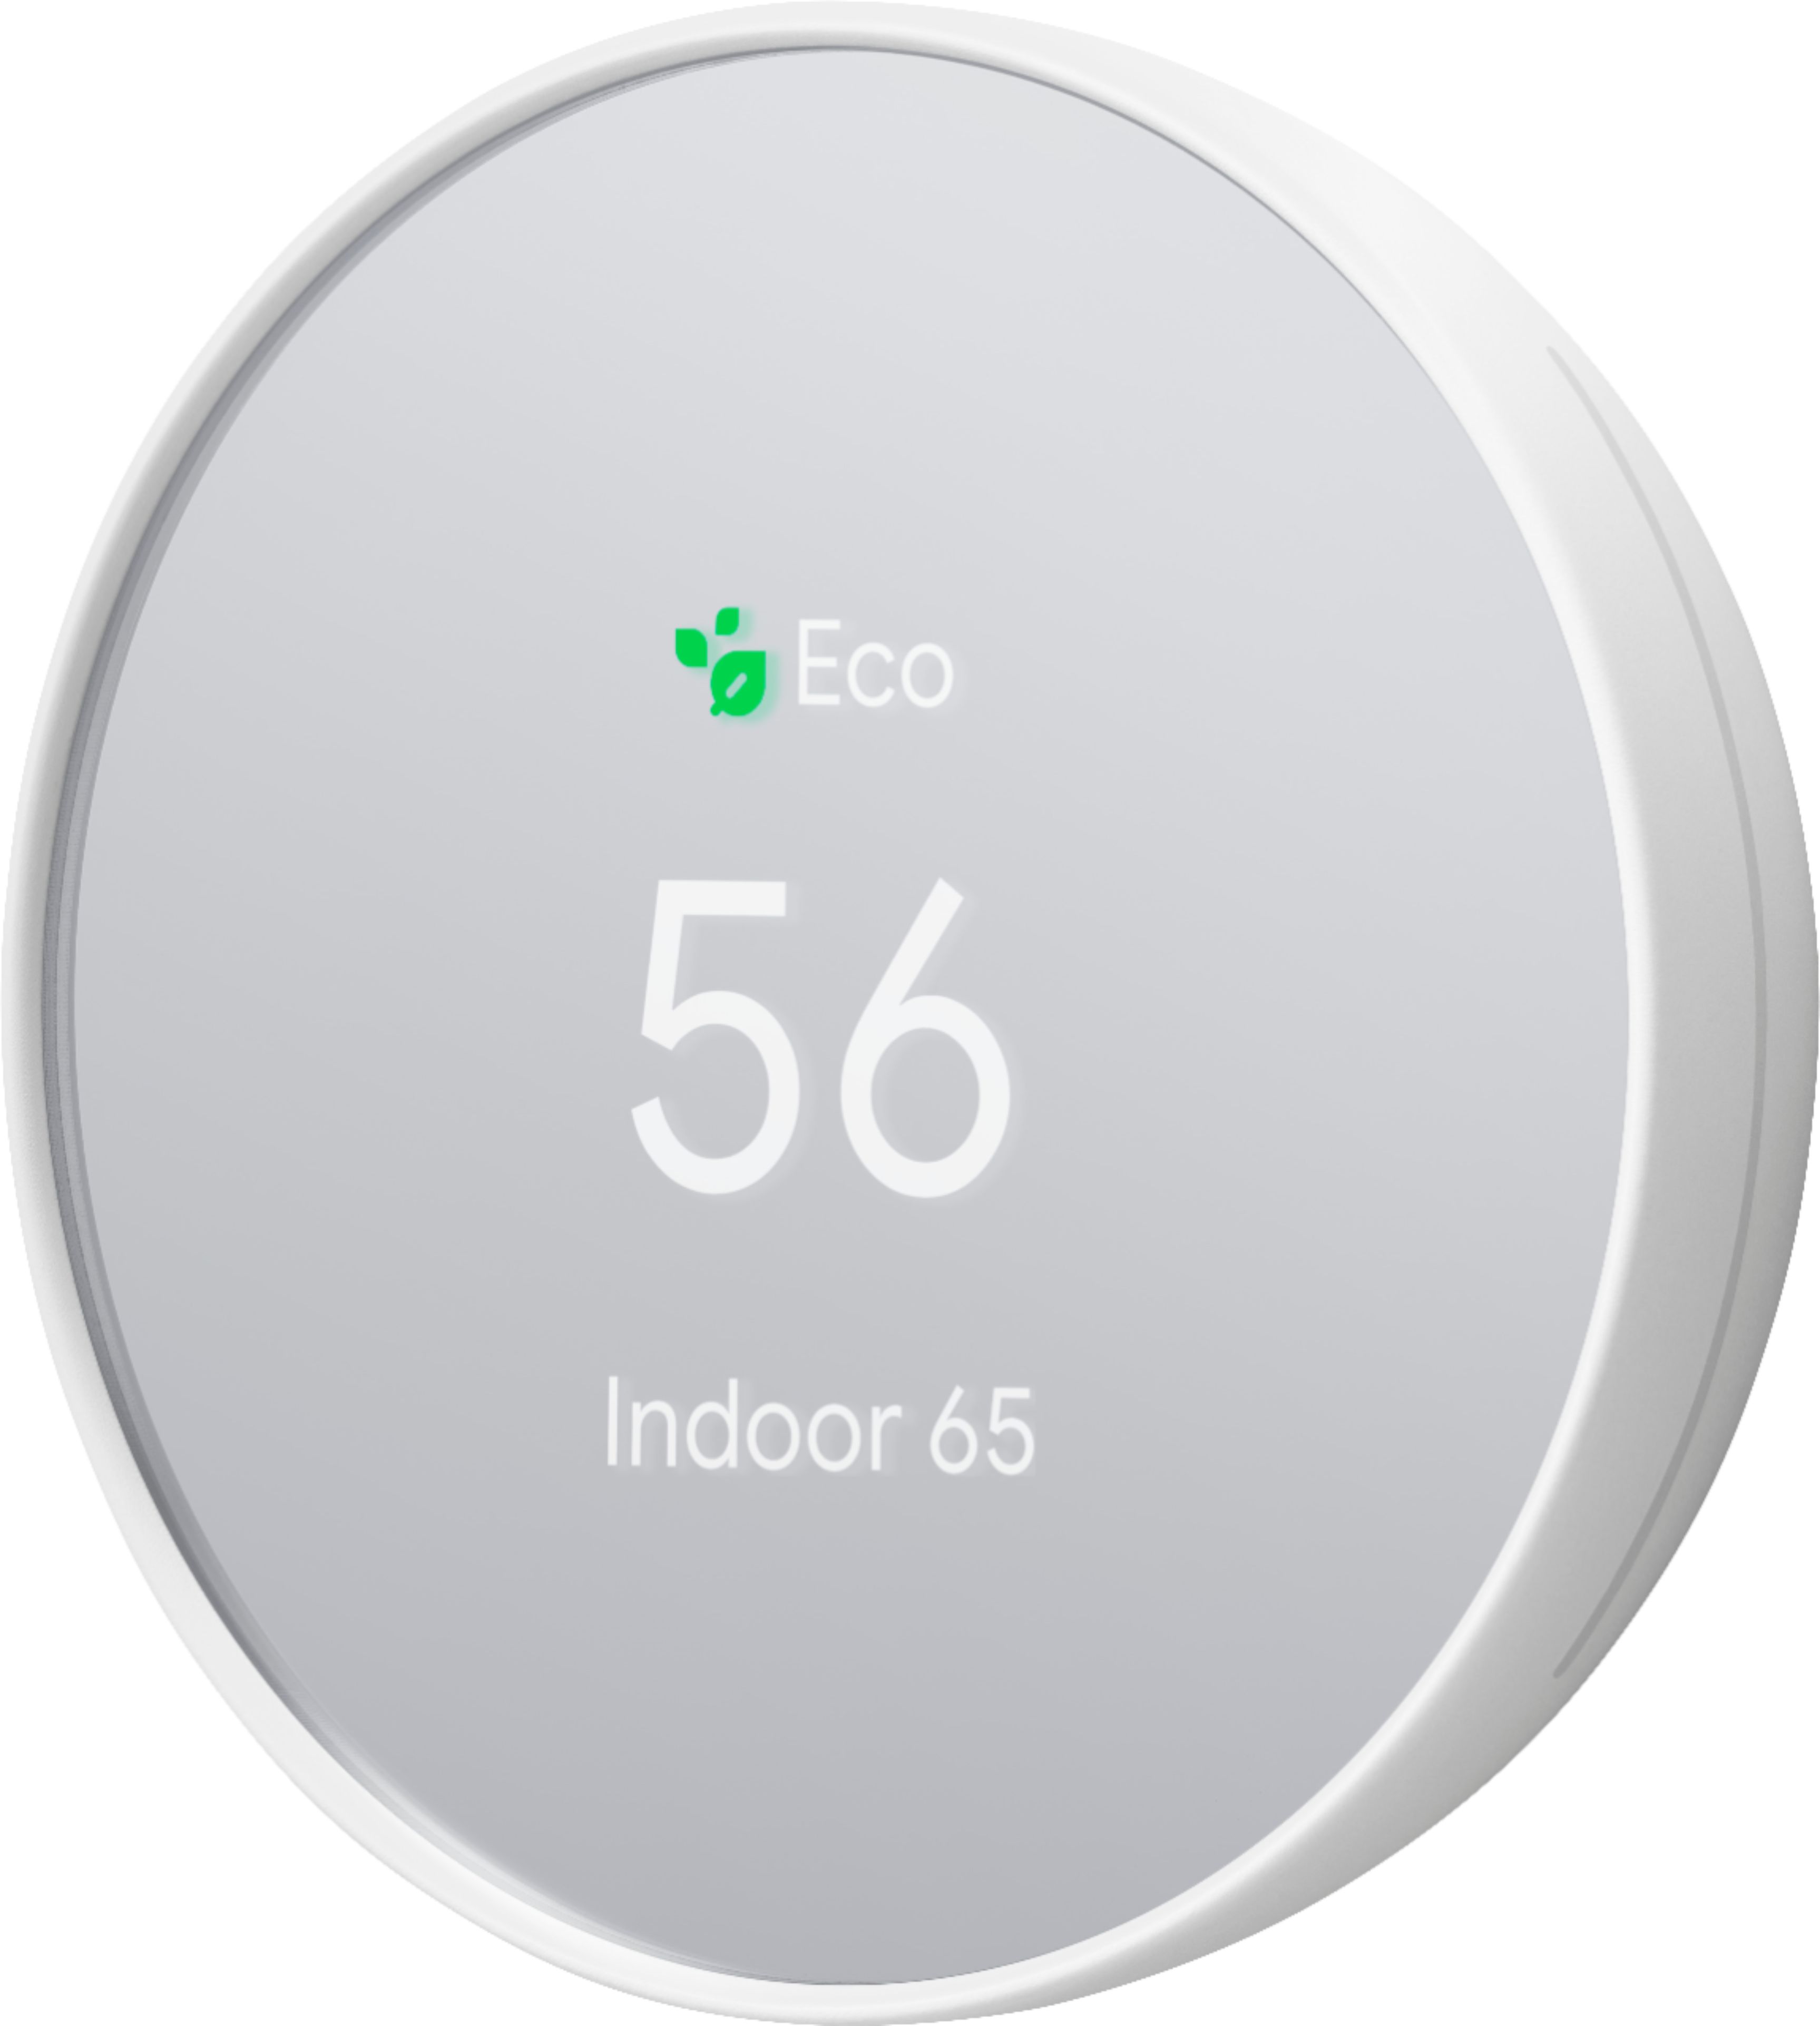 Newegg.com - Nest Thermostat